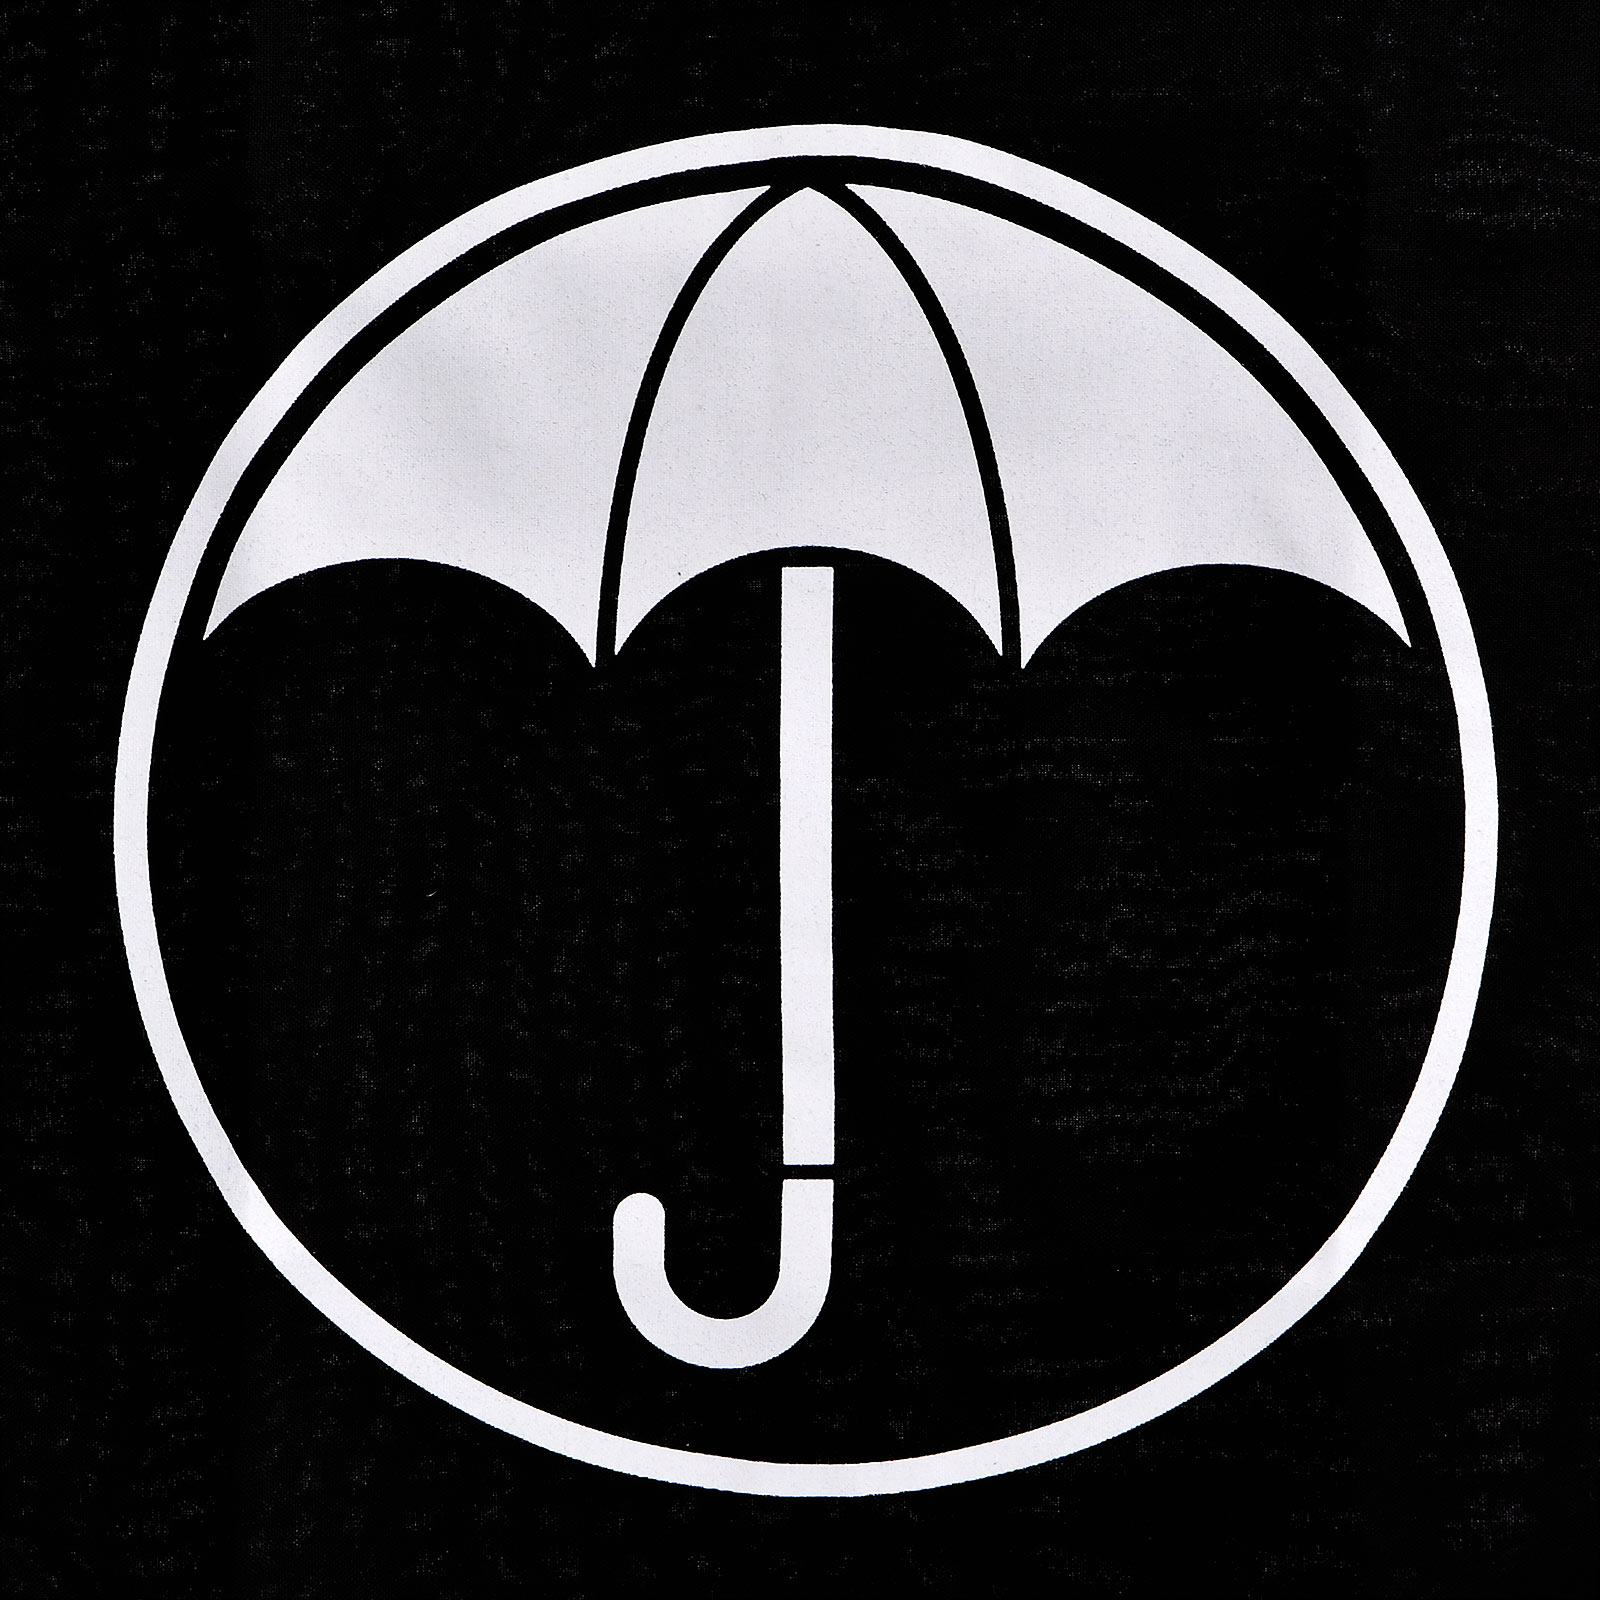 Logo Sportbag für The Umbrella Academy Fans schwarz